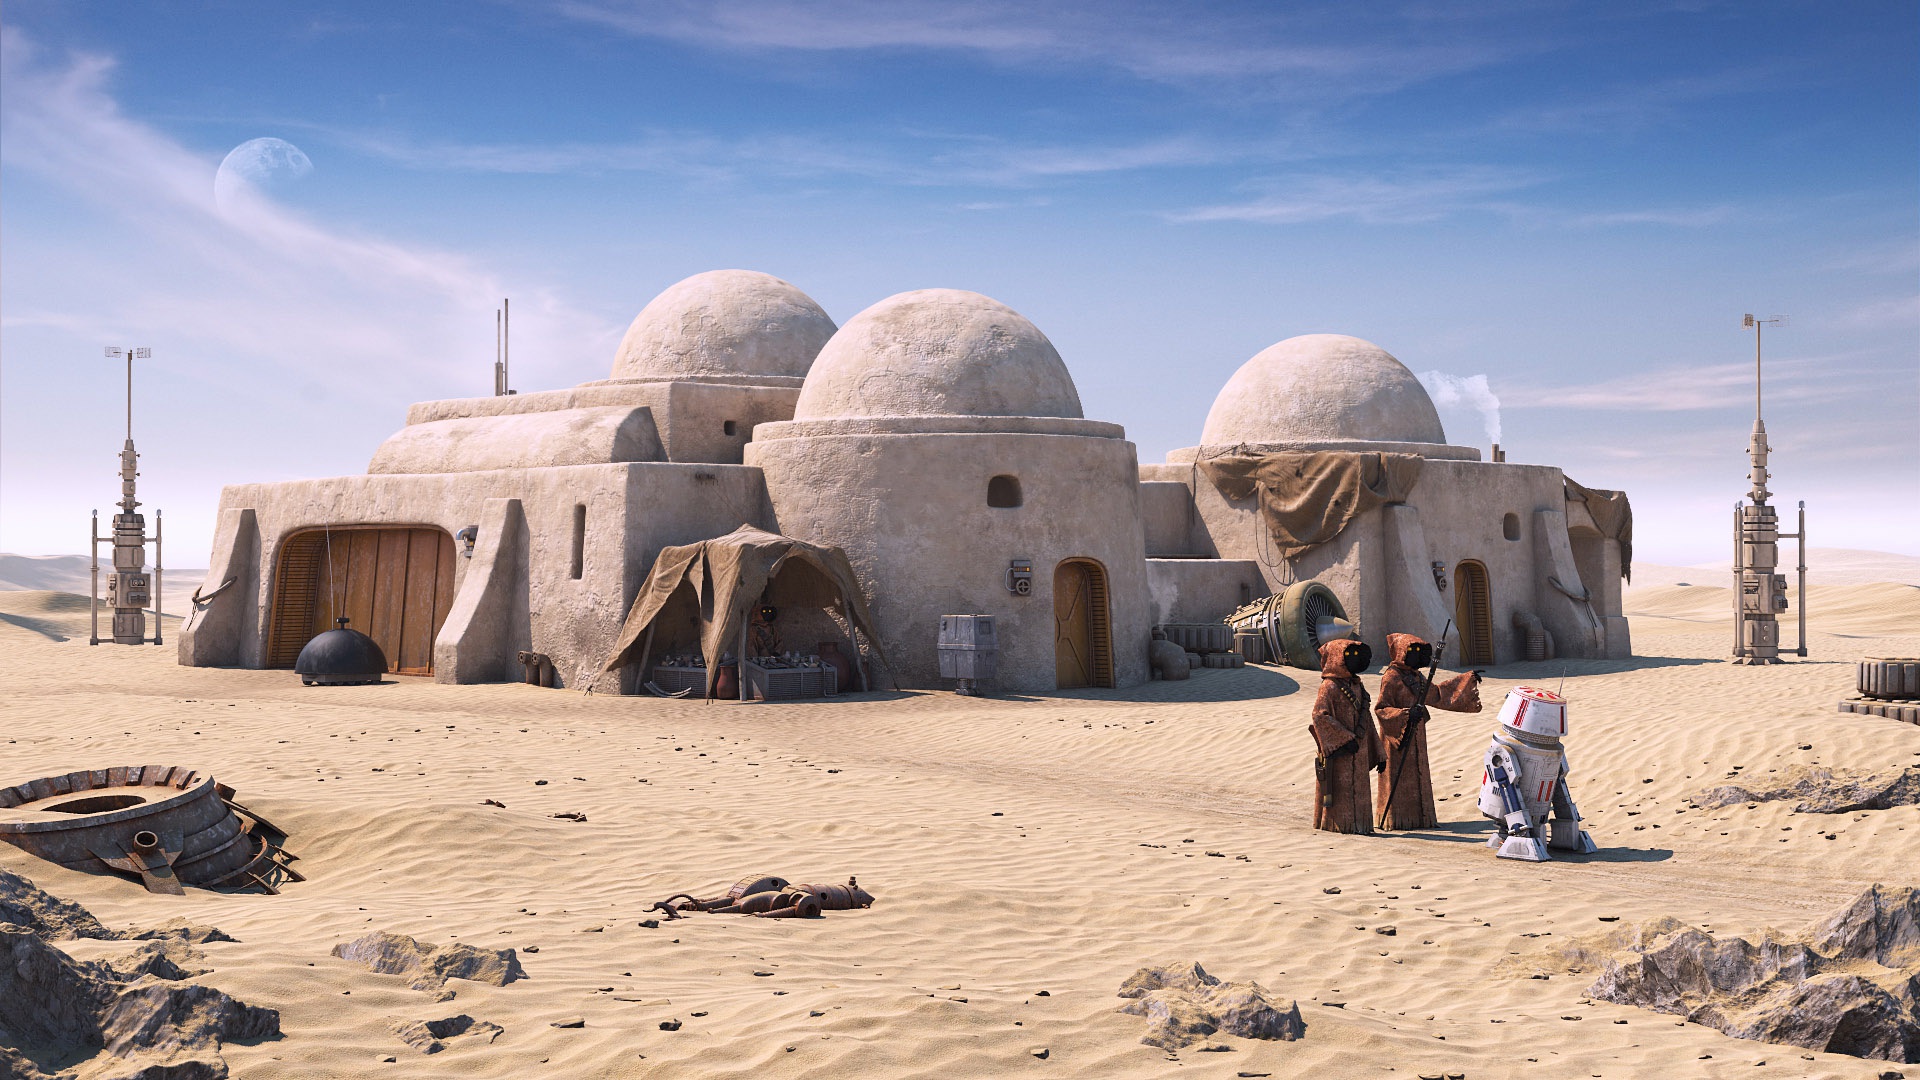 Sci Fi Star Wars HD Wallpaper | Background Image